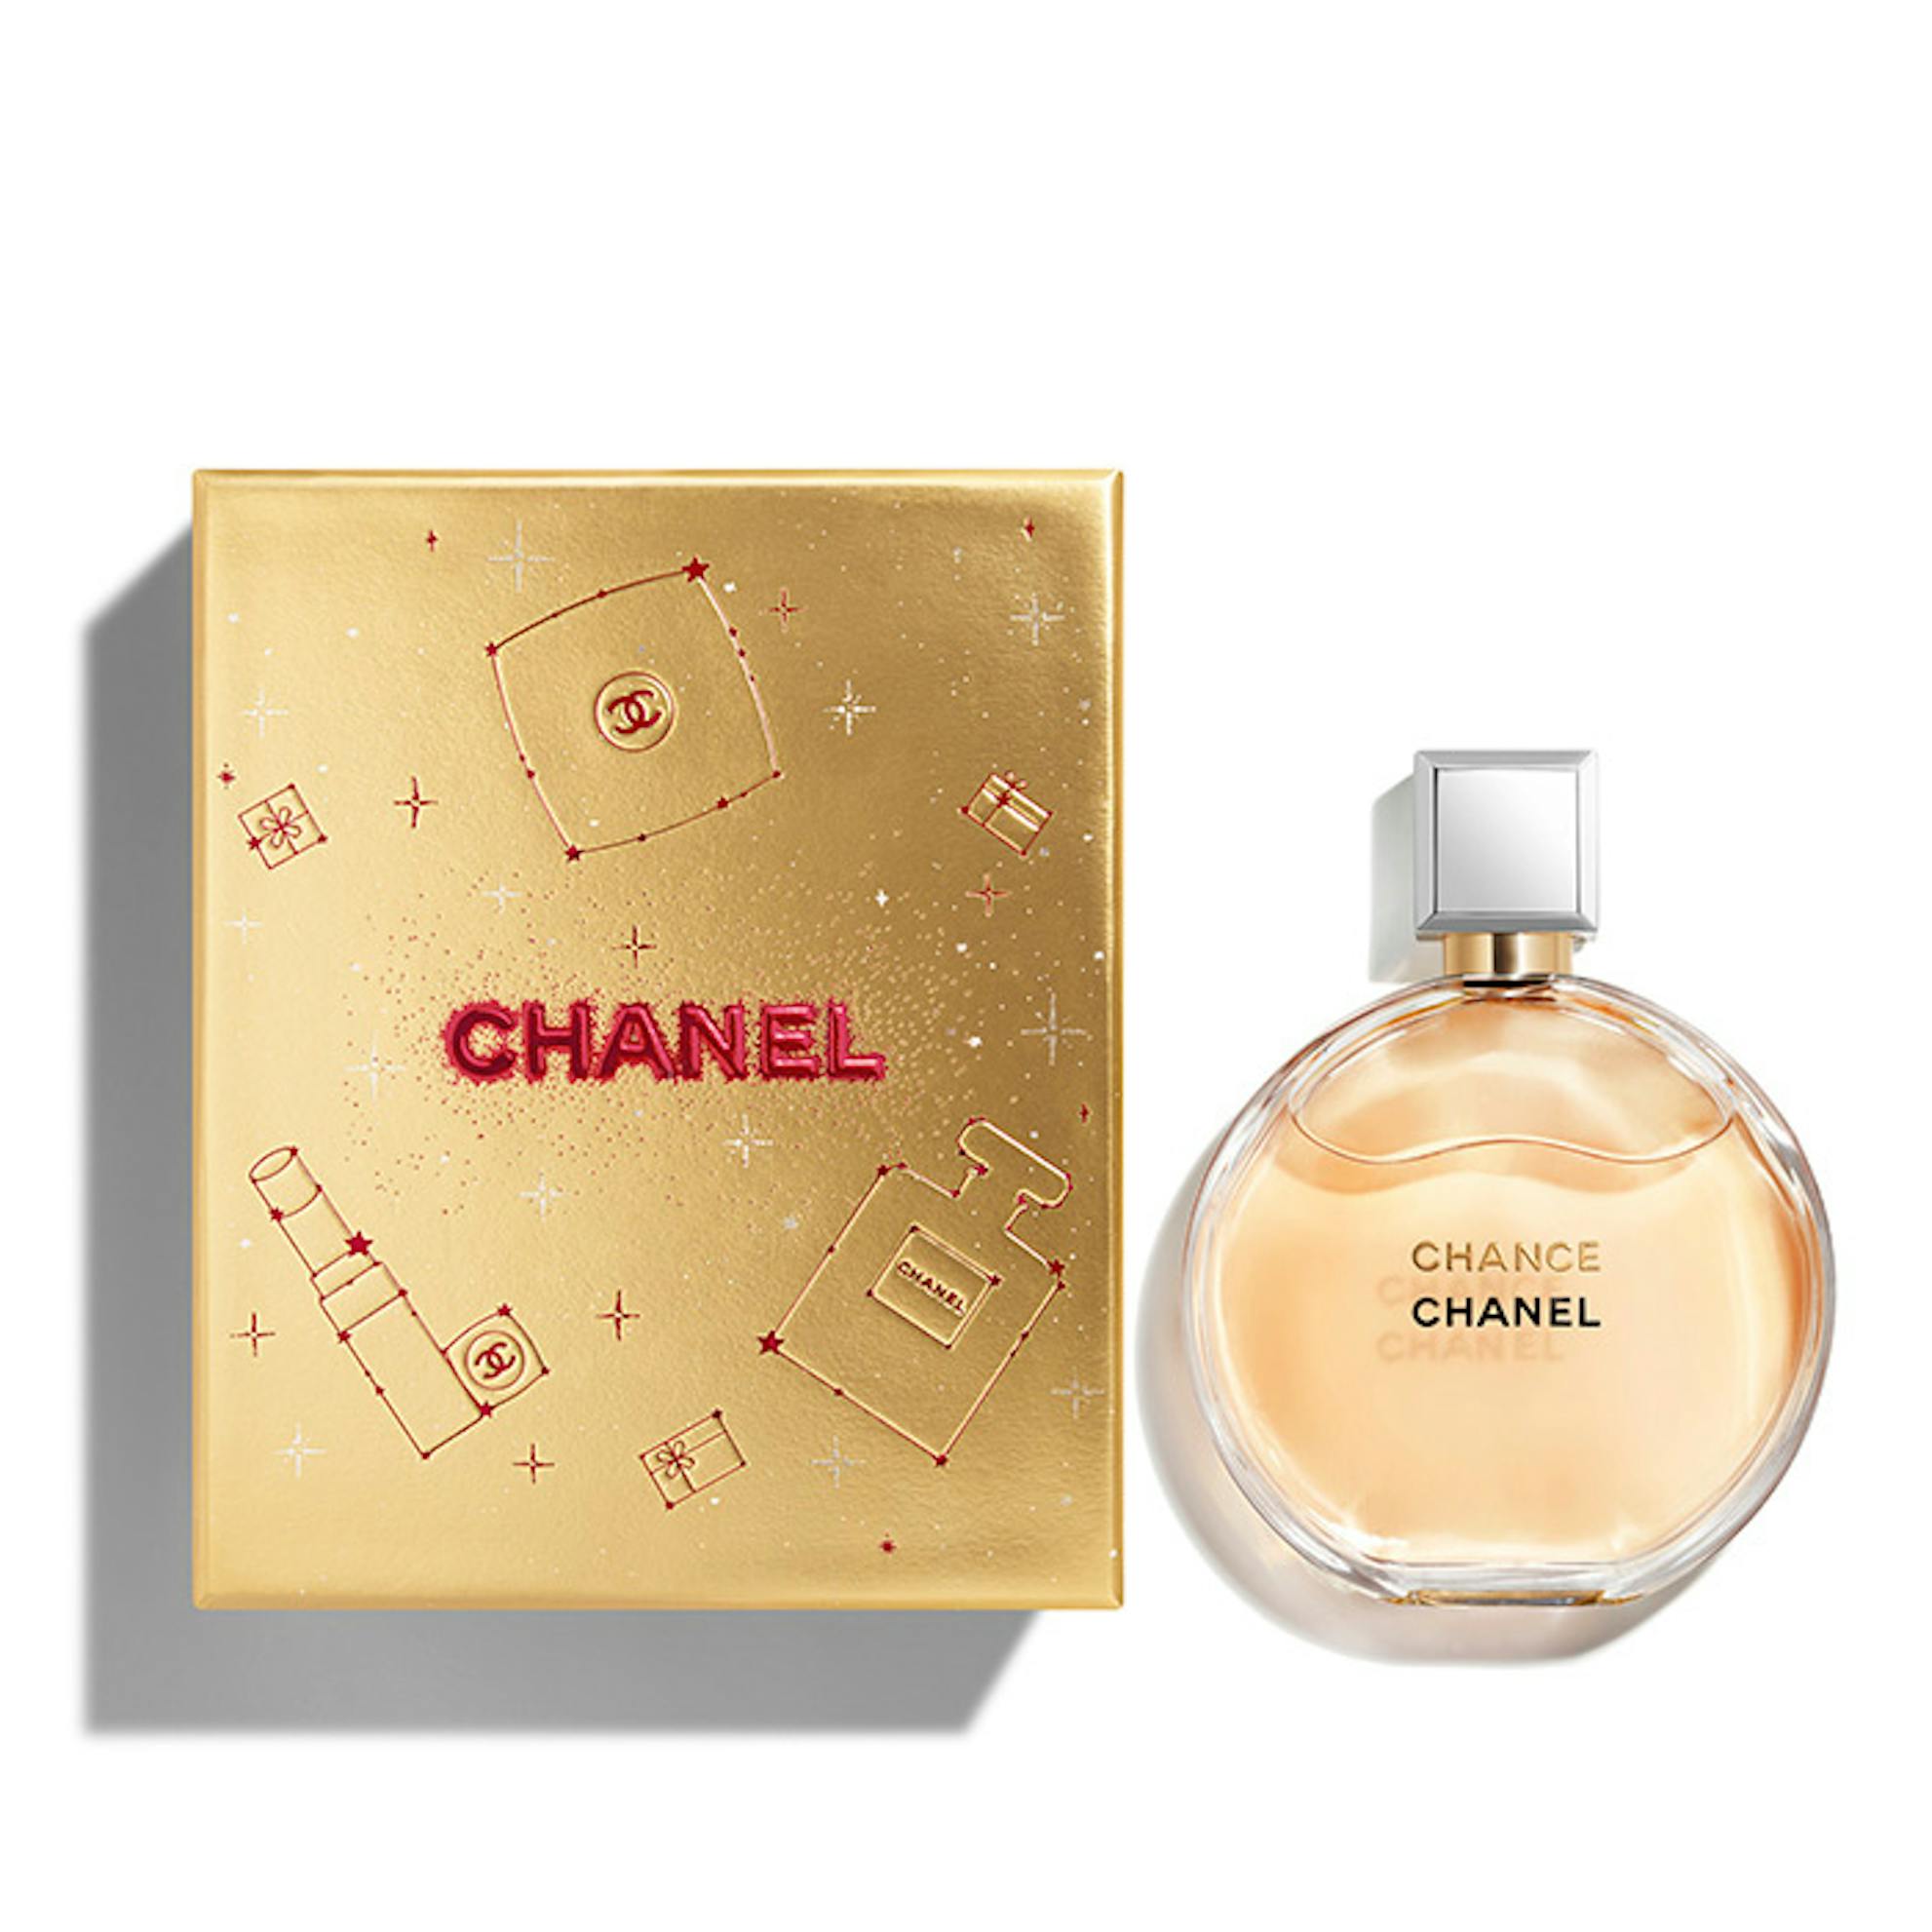 3 x Brand New Chanel Chance Eau Tendre Eau De Parfum Spray 1.5ml